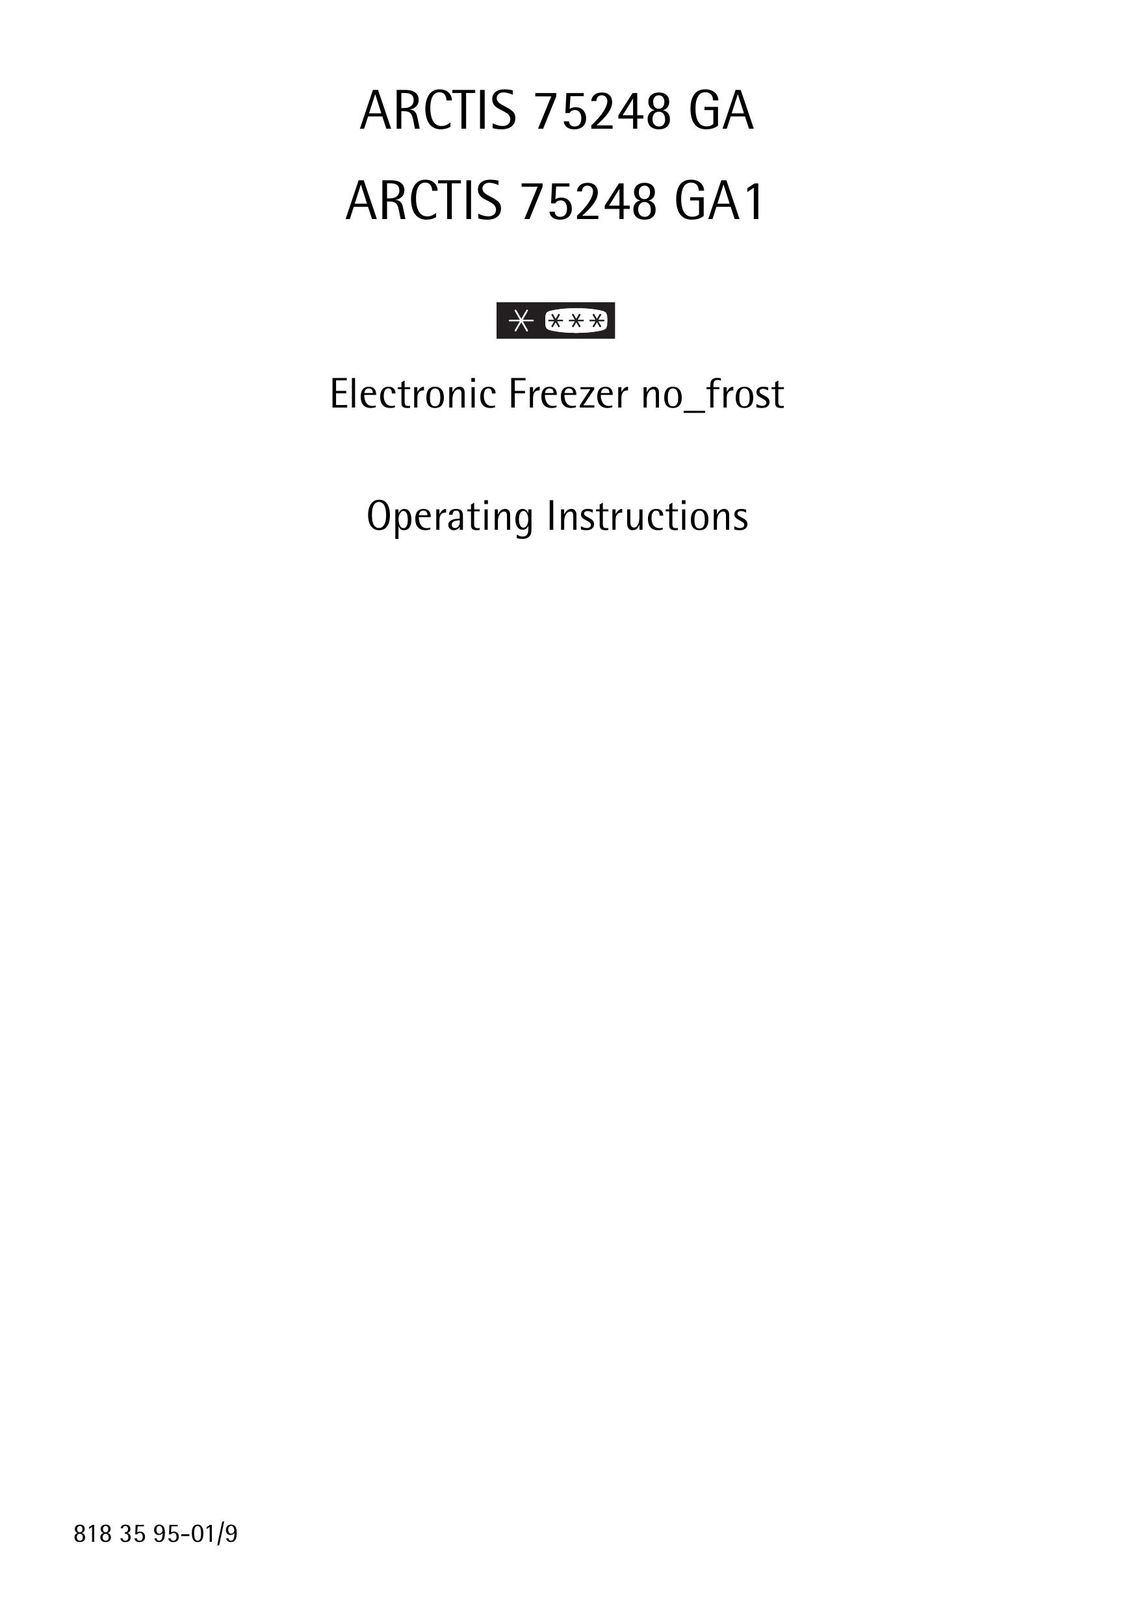 AEG 75248 GA Freezer User Manual